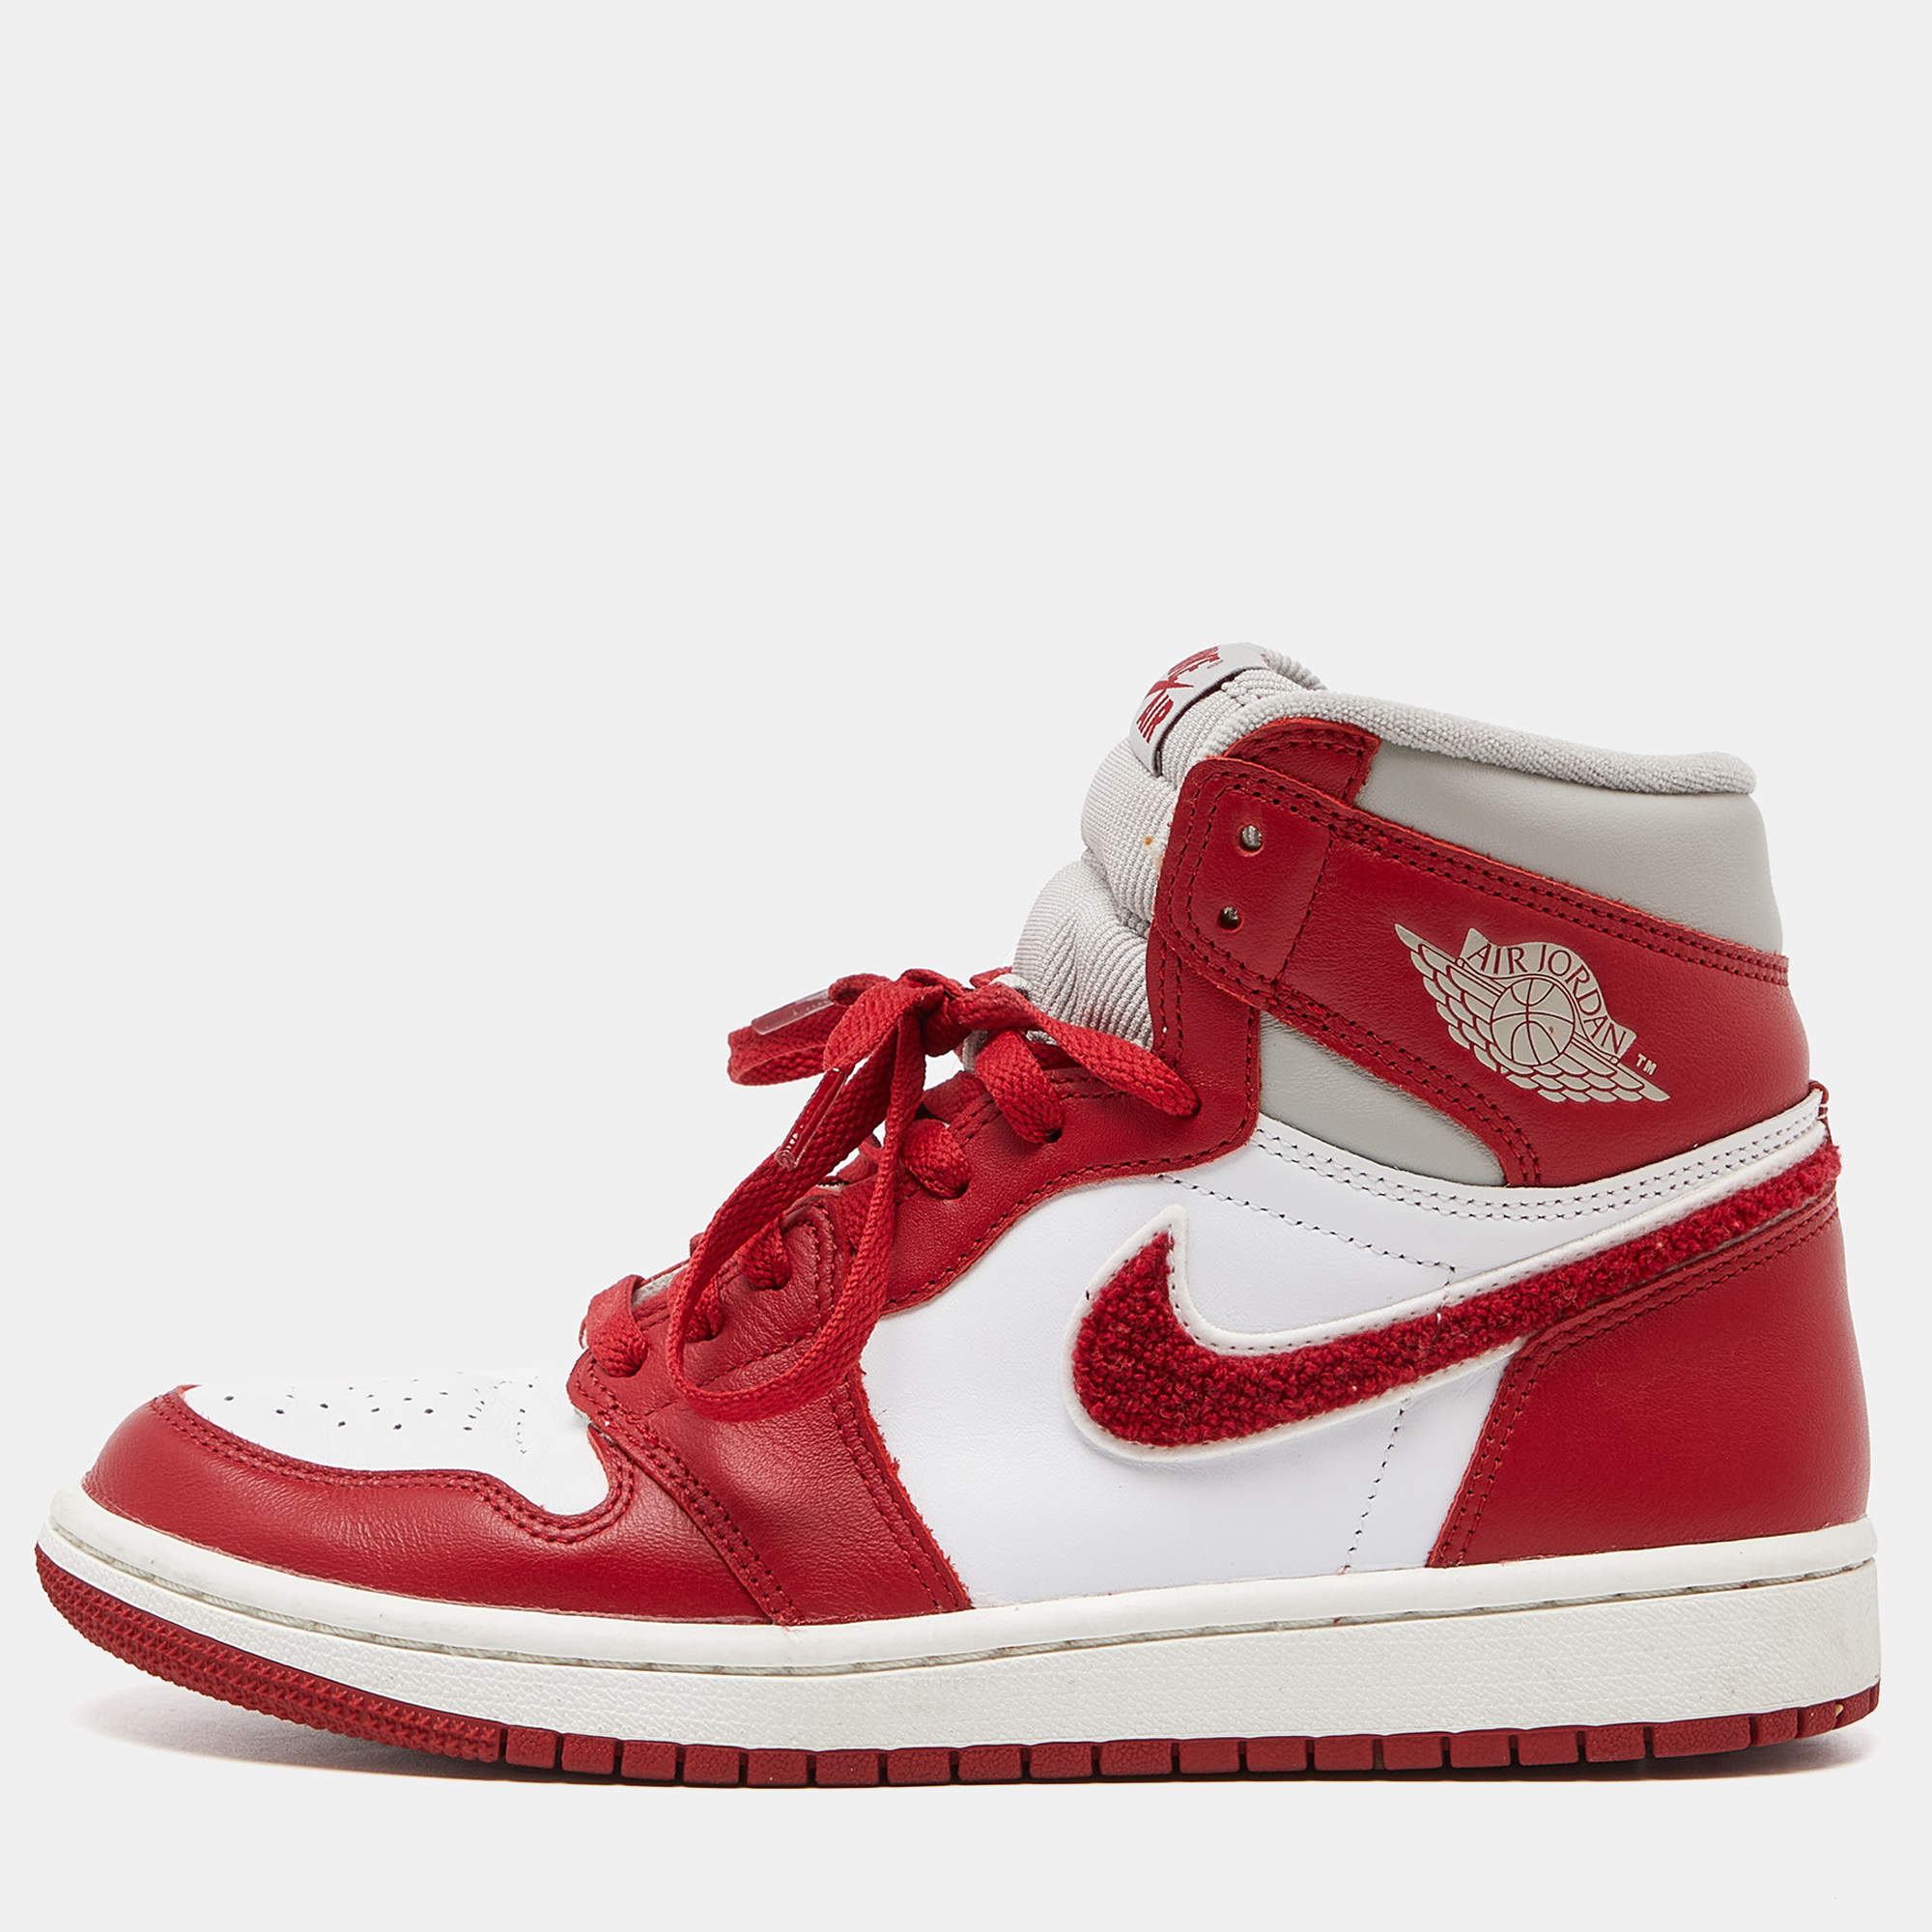 Nike Air Jordan Red/White Leather Jordan 1 1 High OG "Newstalgia" Sneakers Size 40